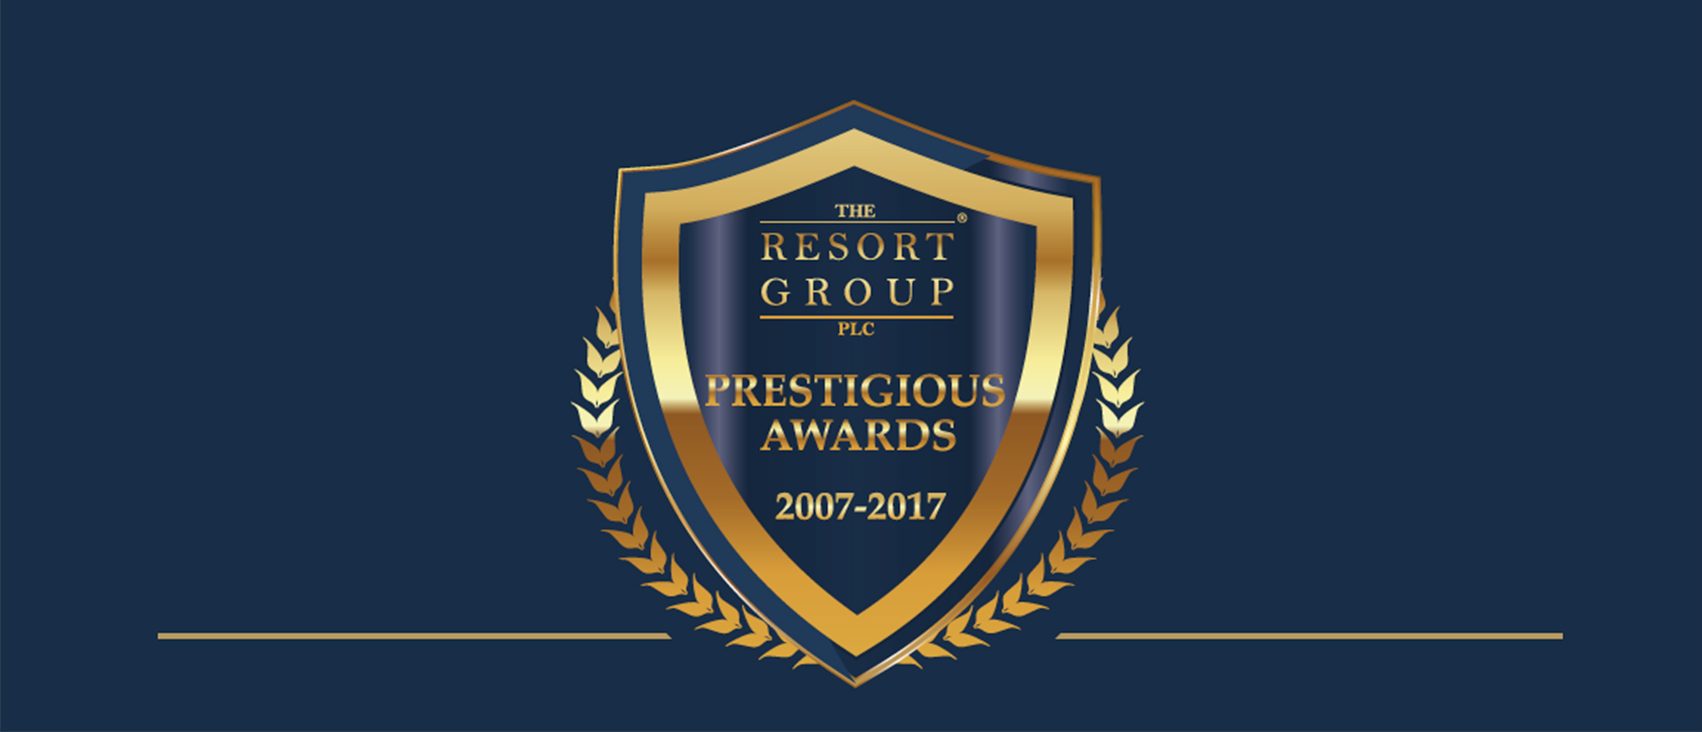 TRG Prestigious Awards logo